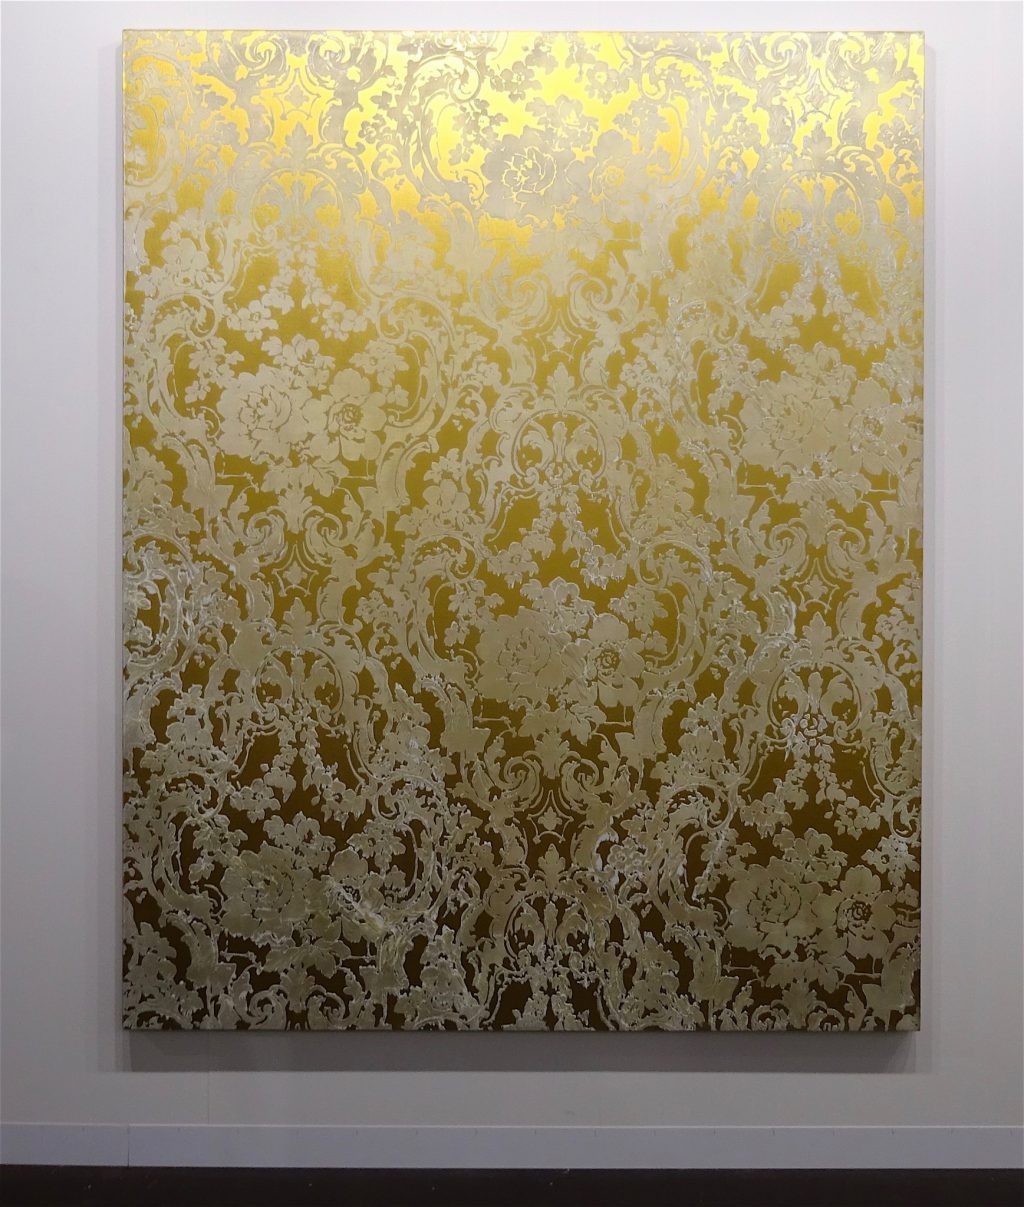 Rudolf Stingel “Untitled” 2007, Oil and enamel on canvas, 242 x 193 cm WHITE CUBE